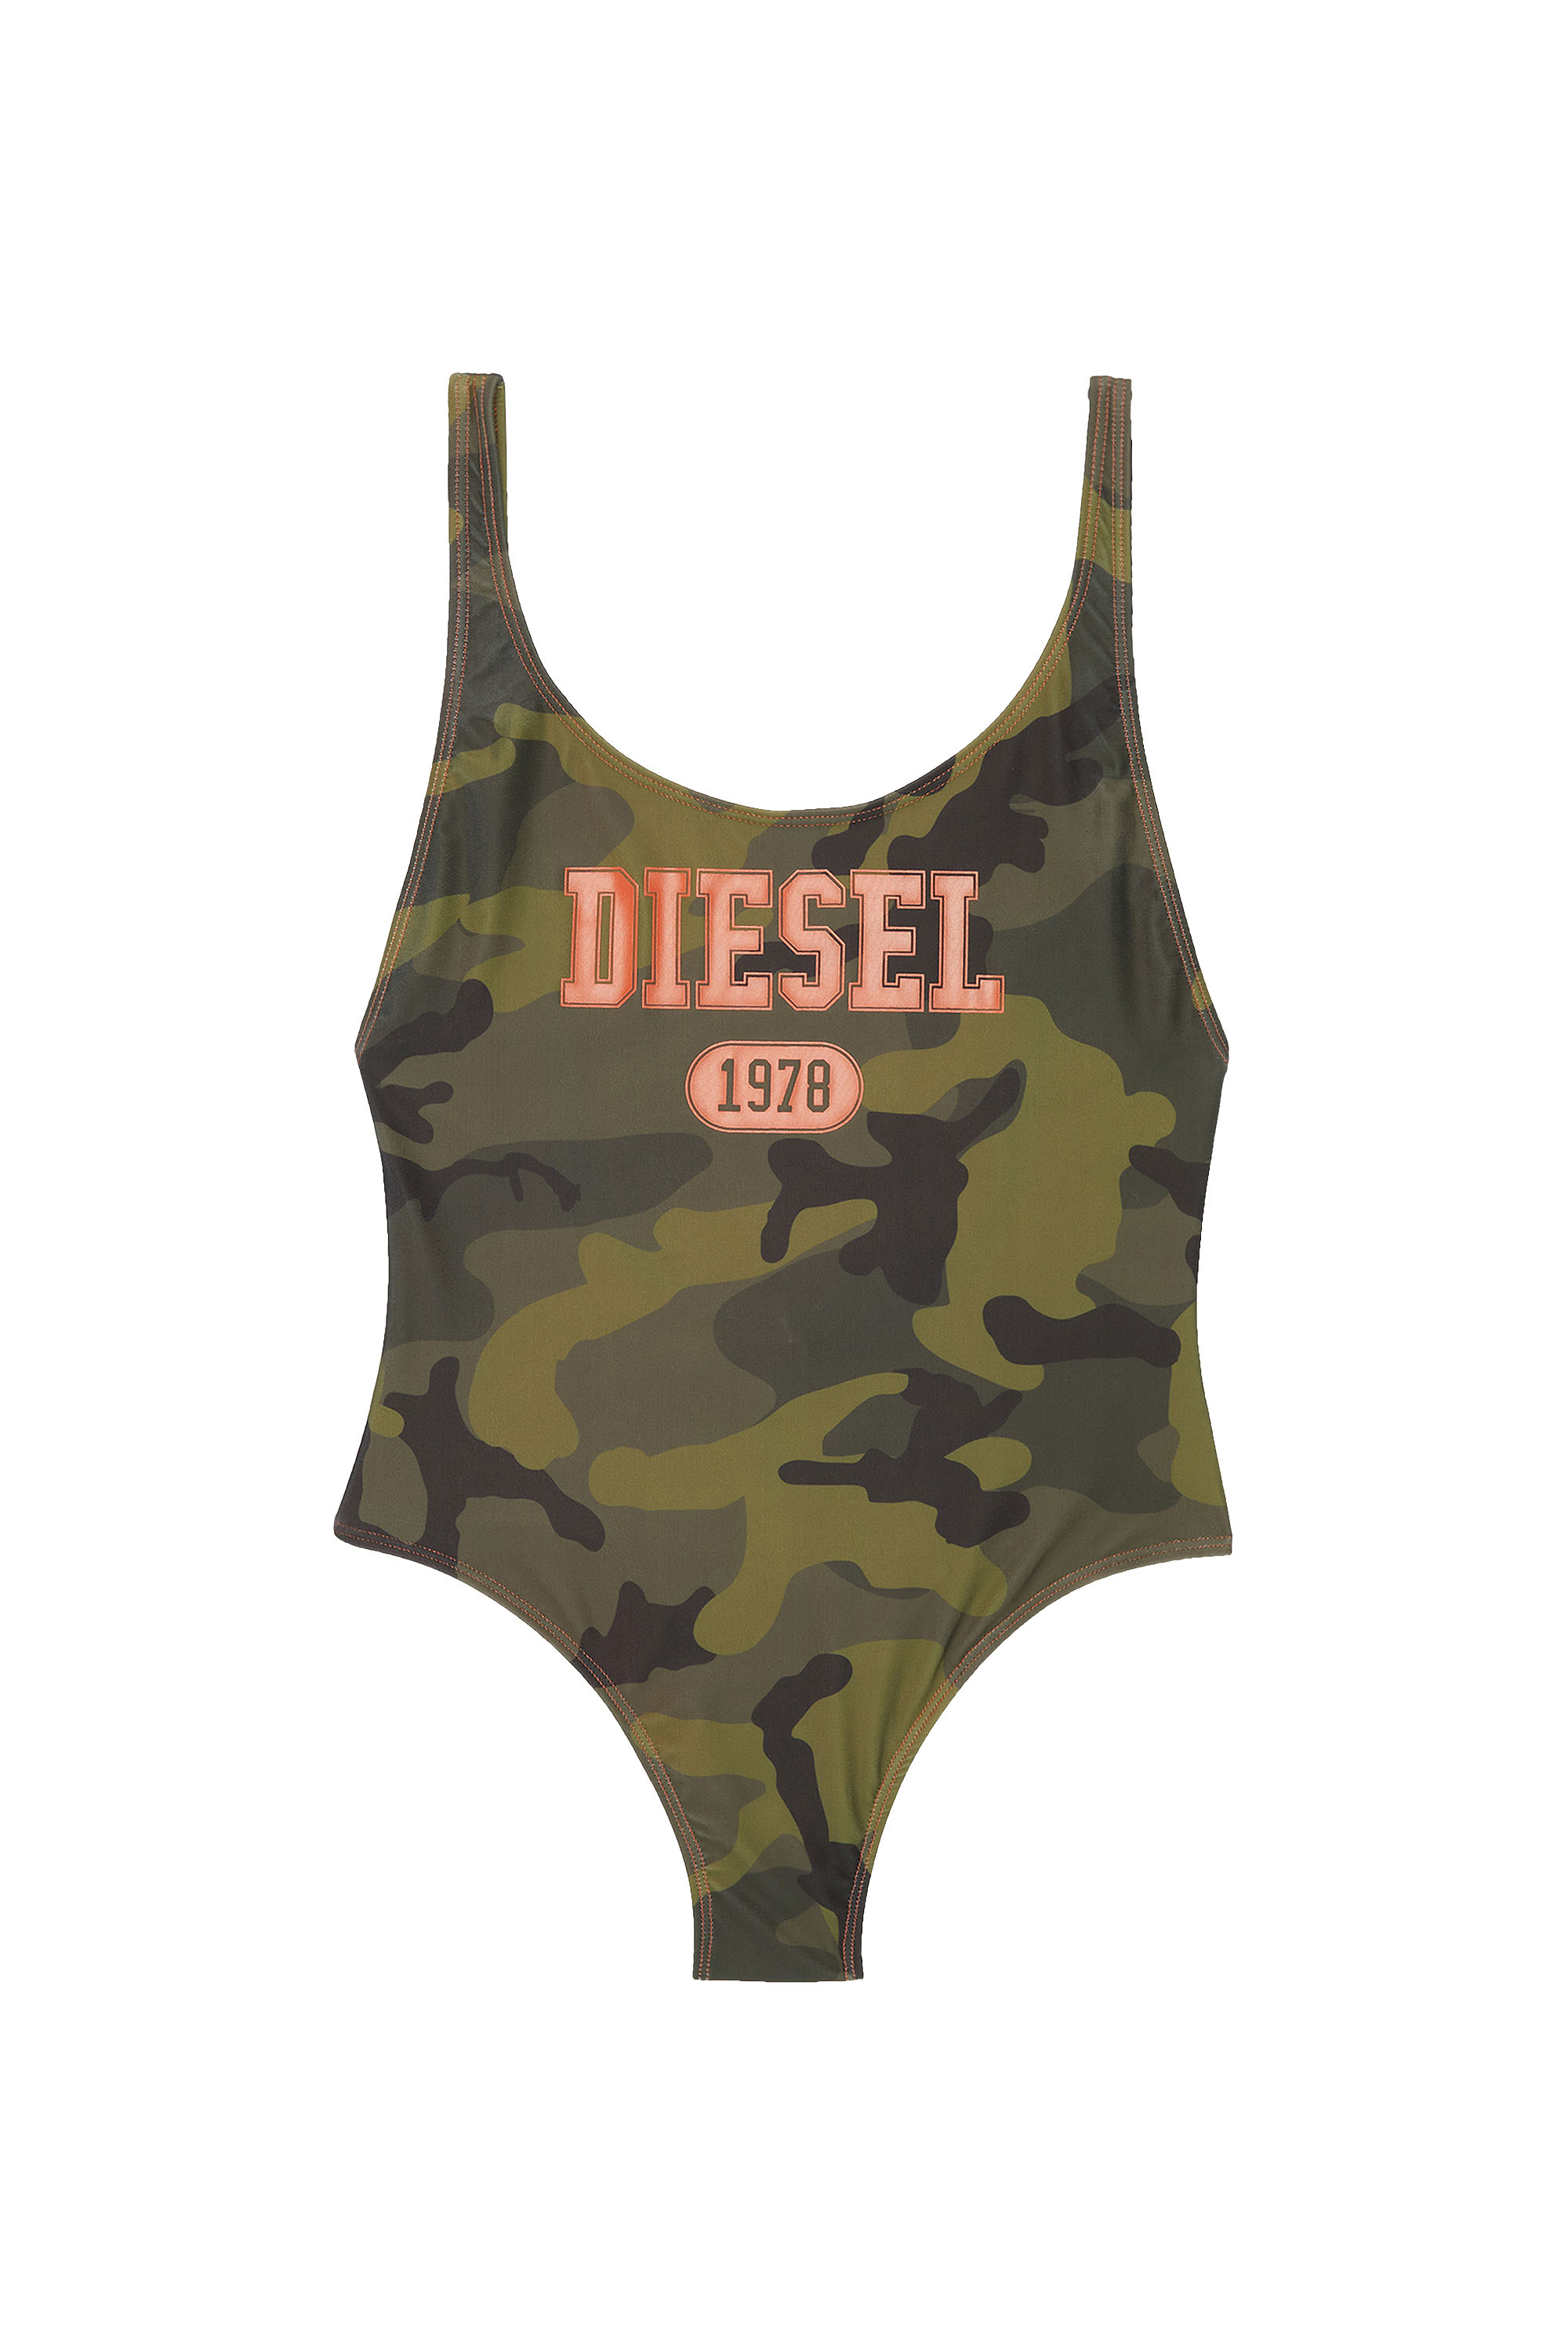 Diesel - BFSW-SLIA, Military Green - Image 3